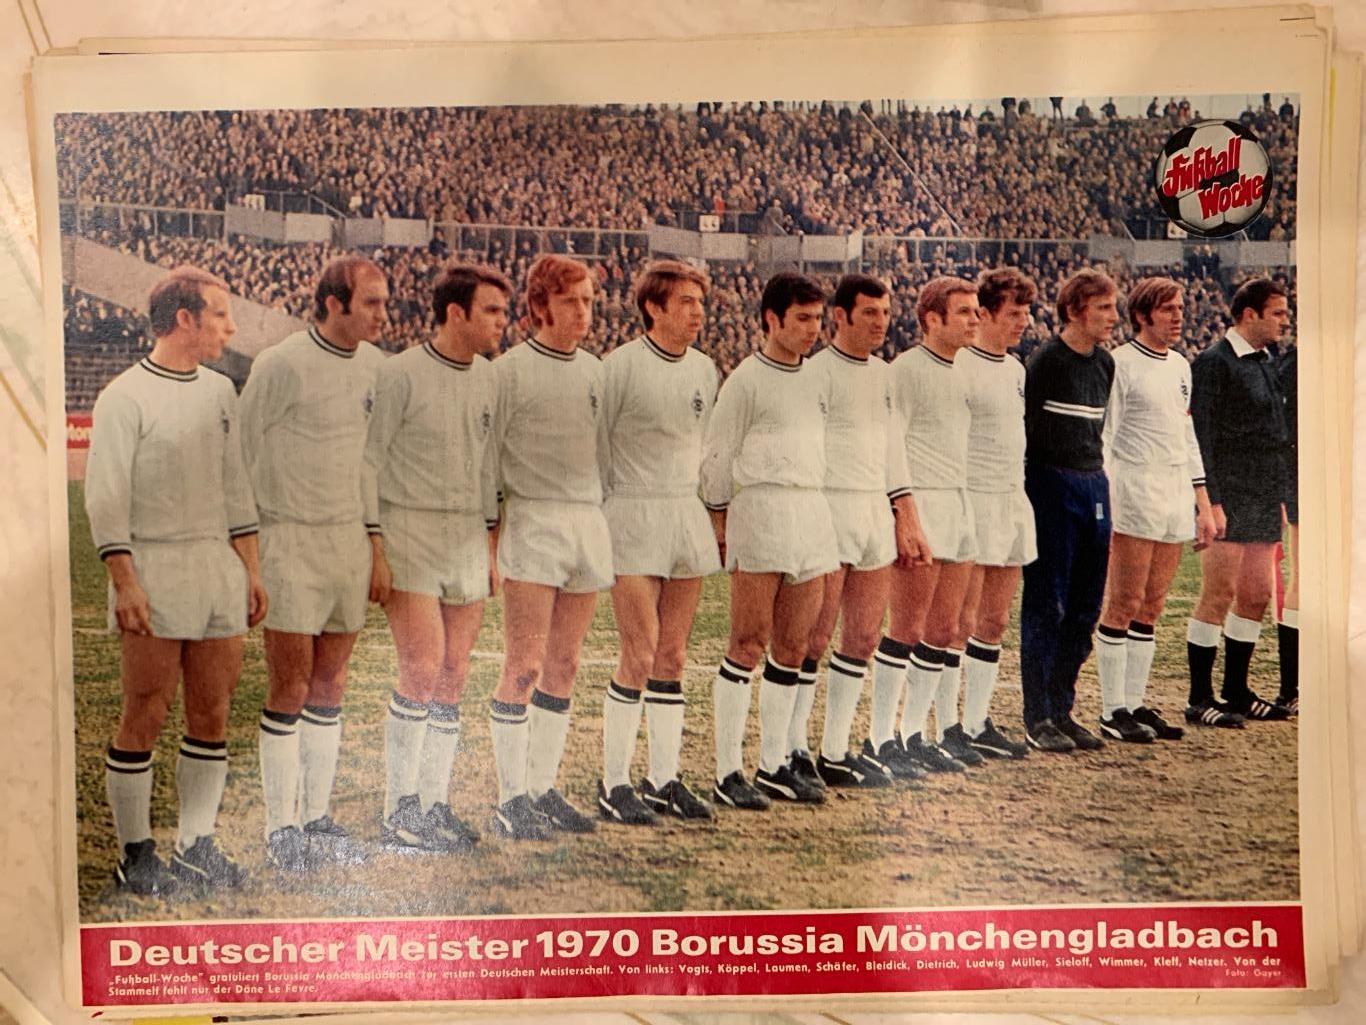 Боруссия менхенгладбах чемпион Германии 1970